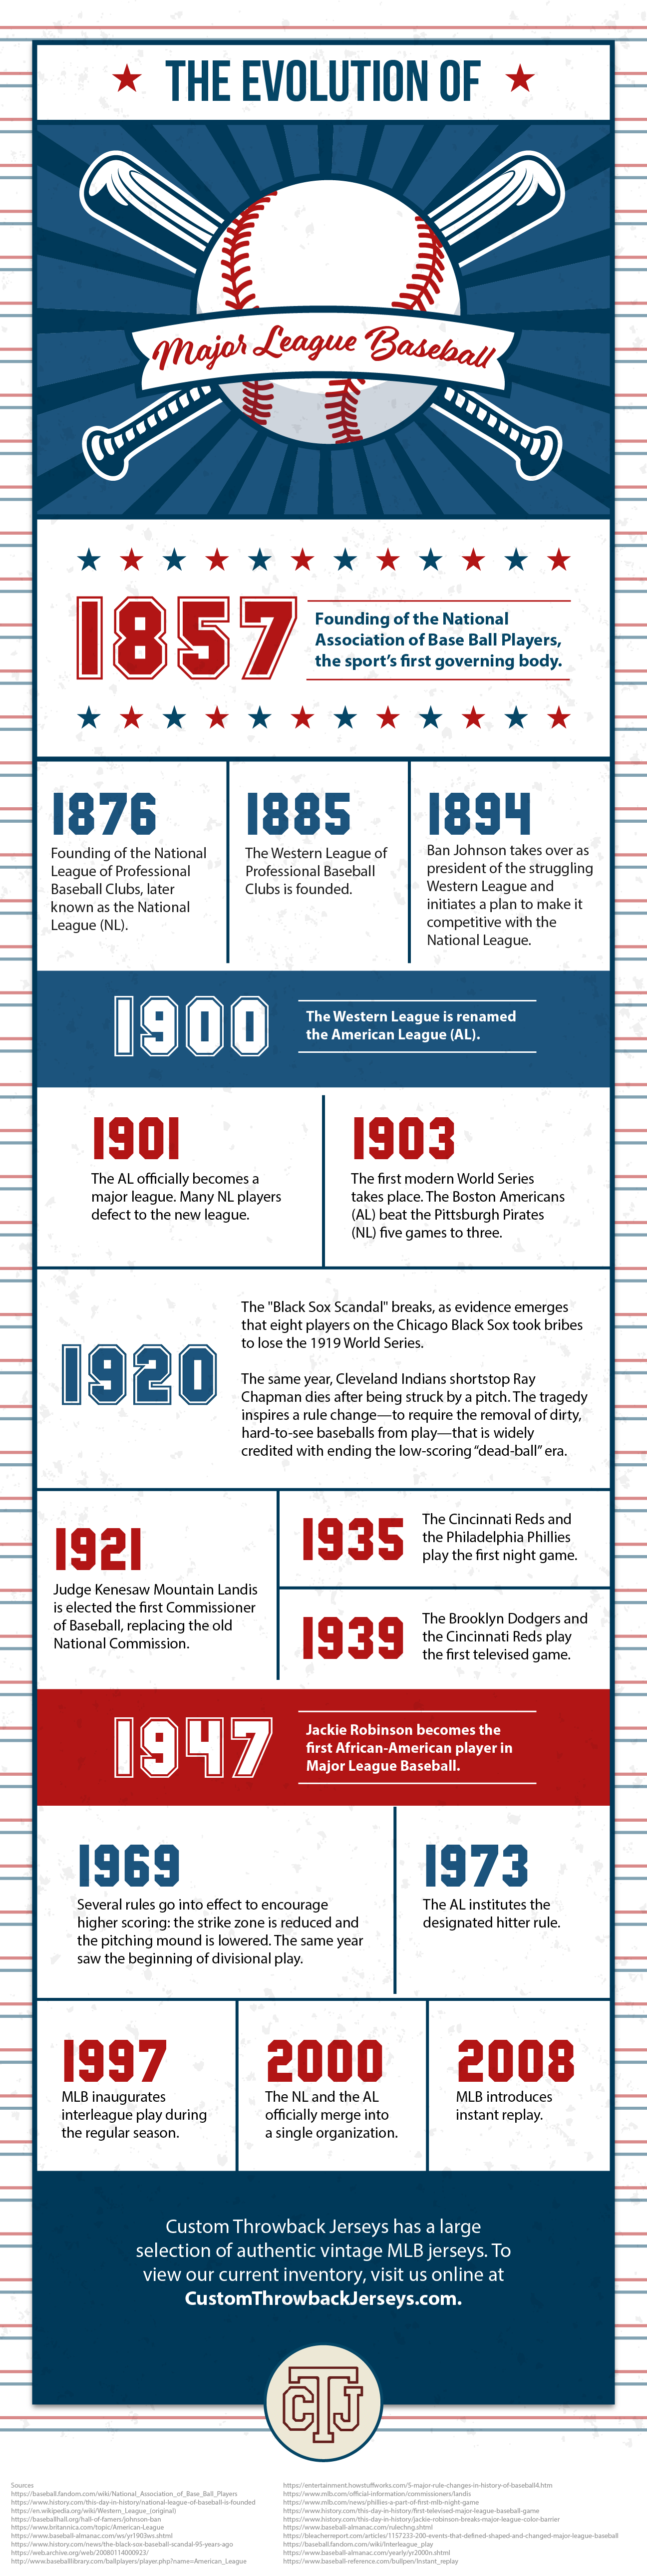 The Evolution of Major League Baseball Infographic